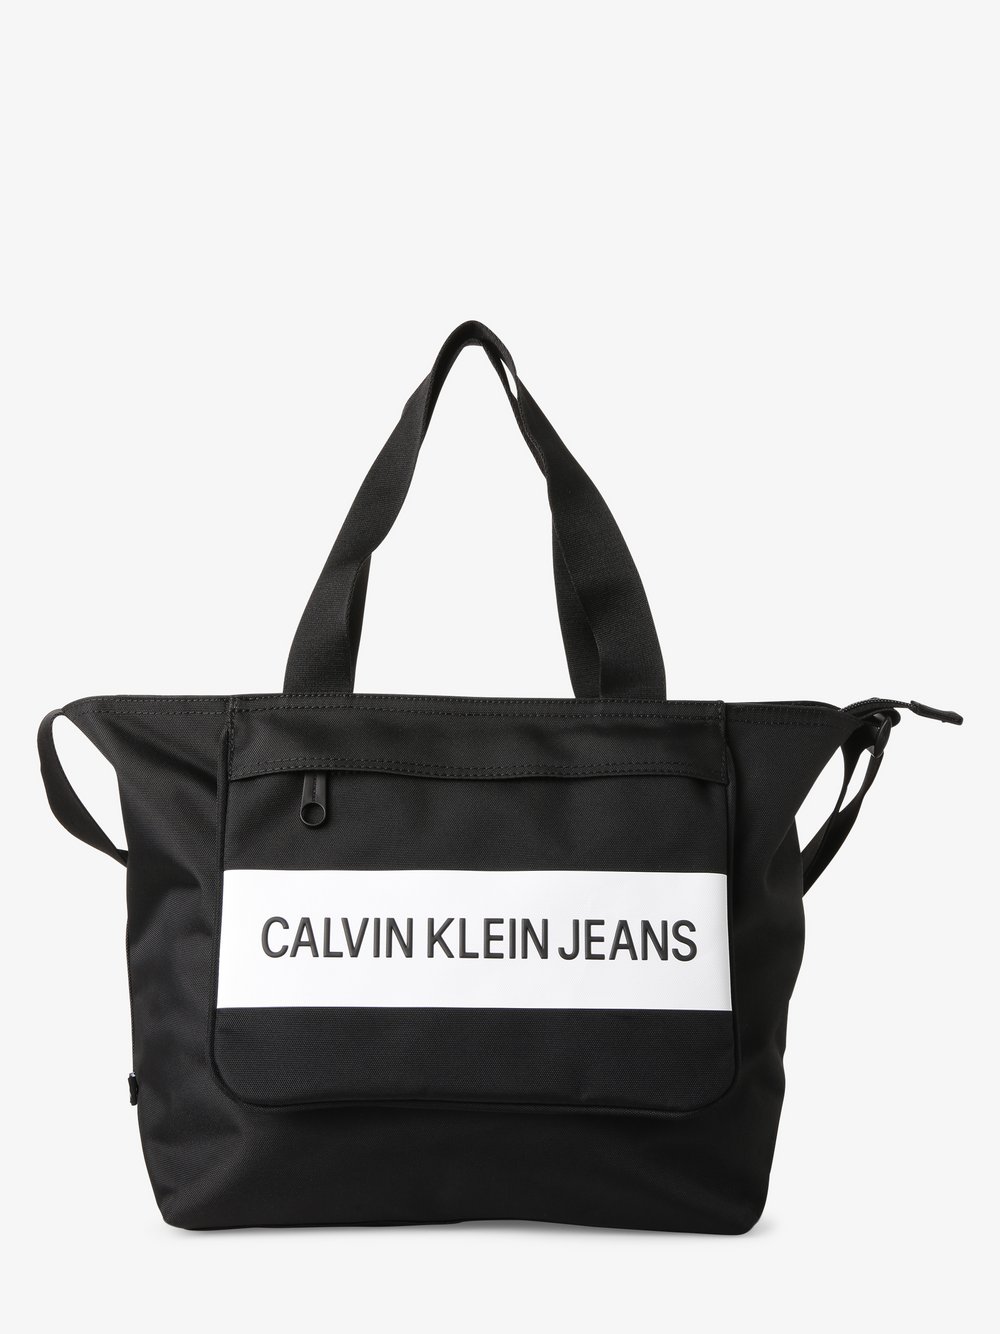 Calvin Klein Jeans - Damska torba shopper, czarny